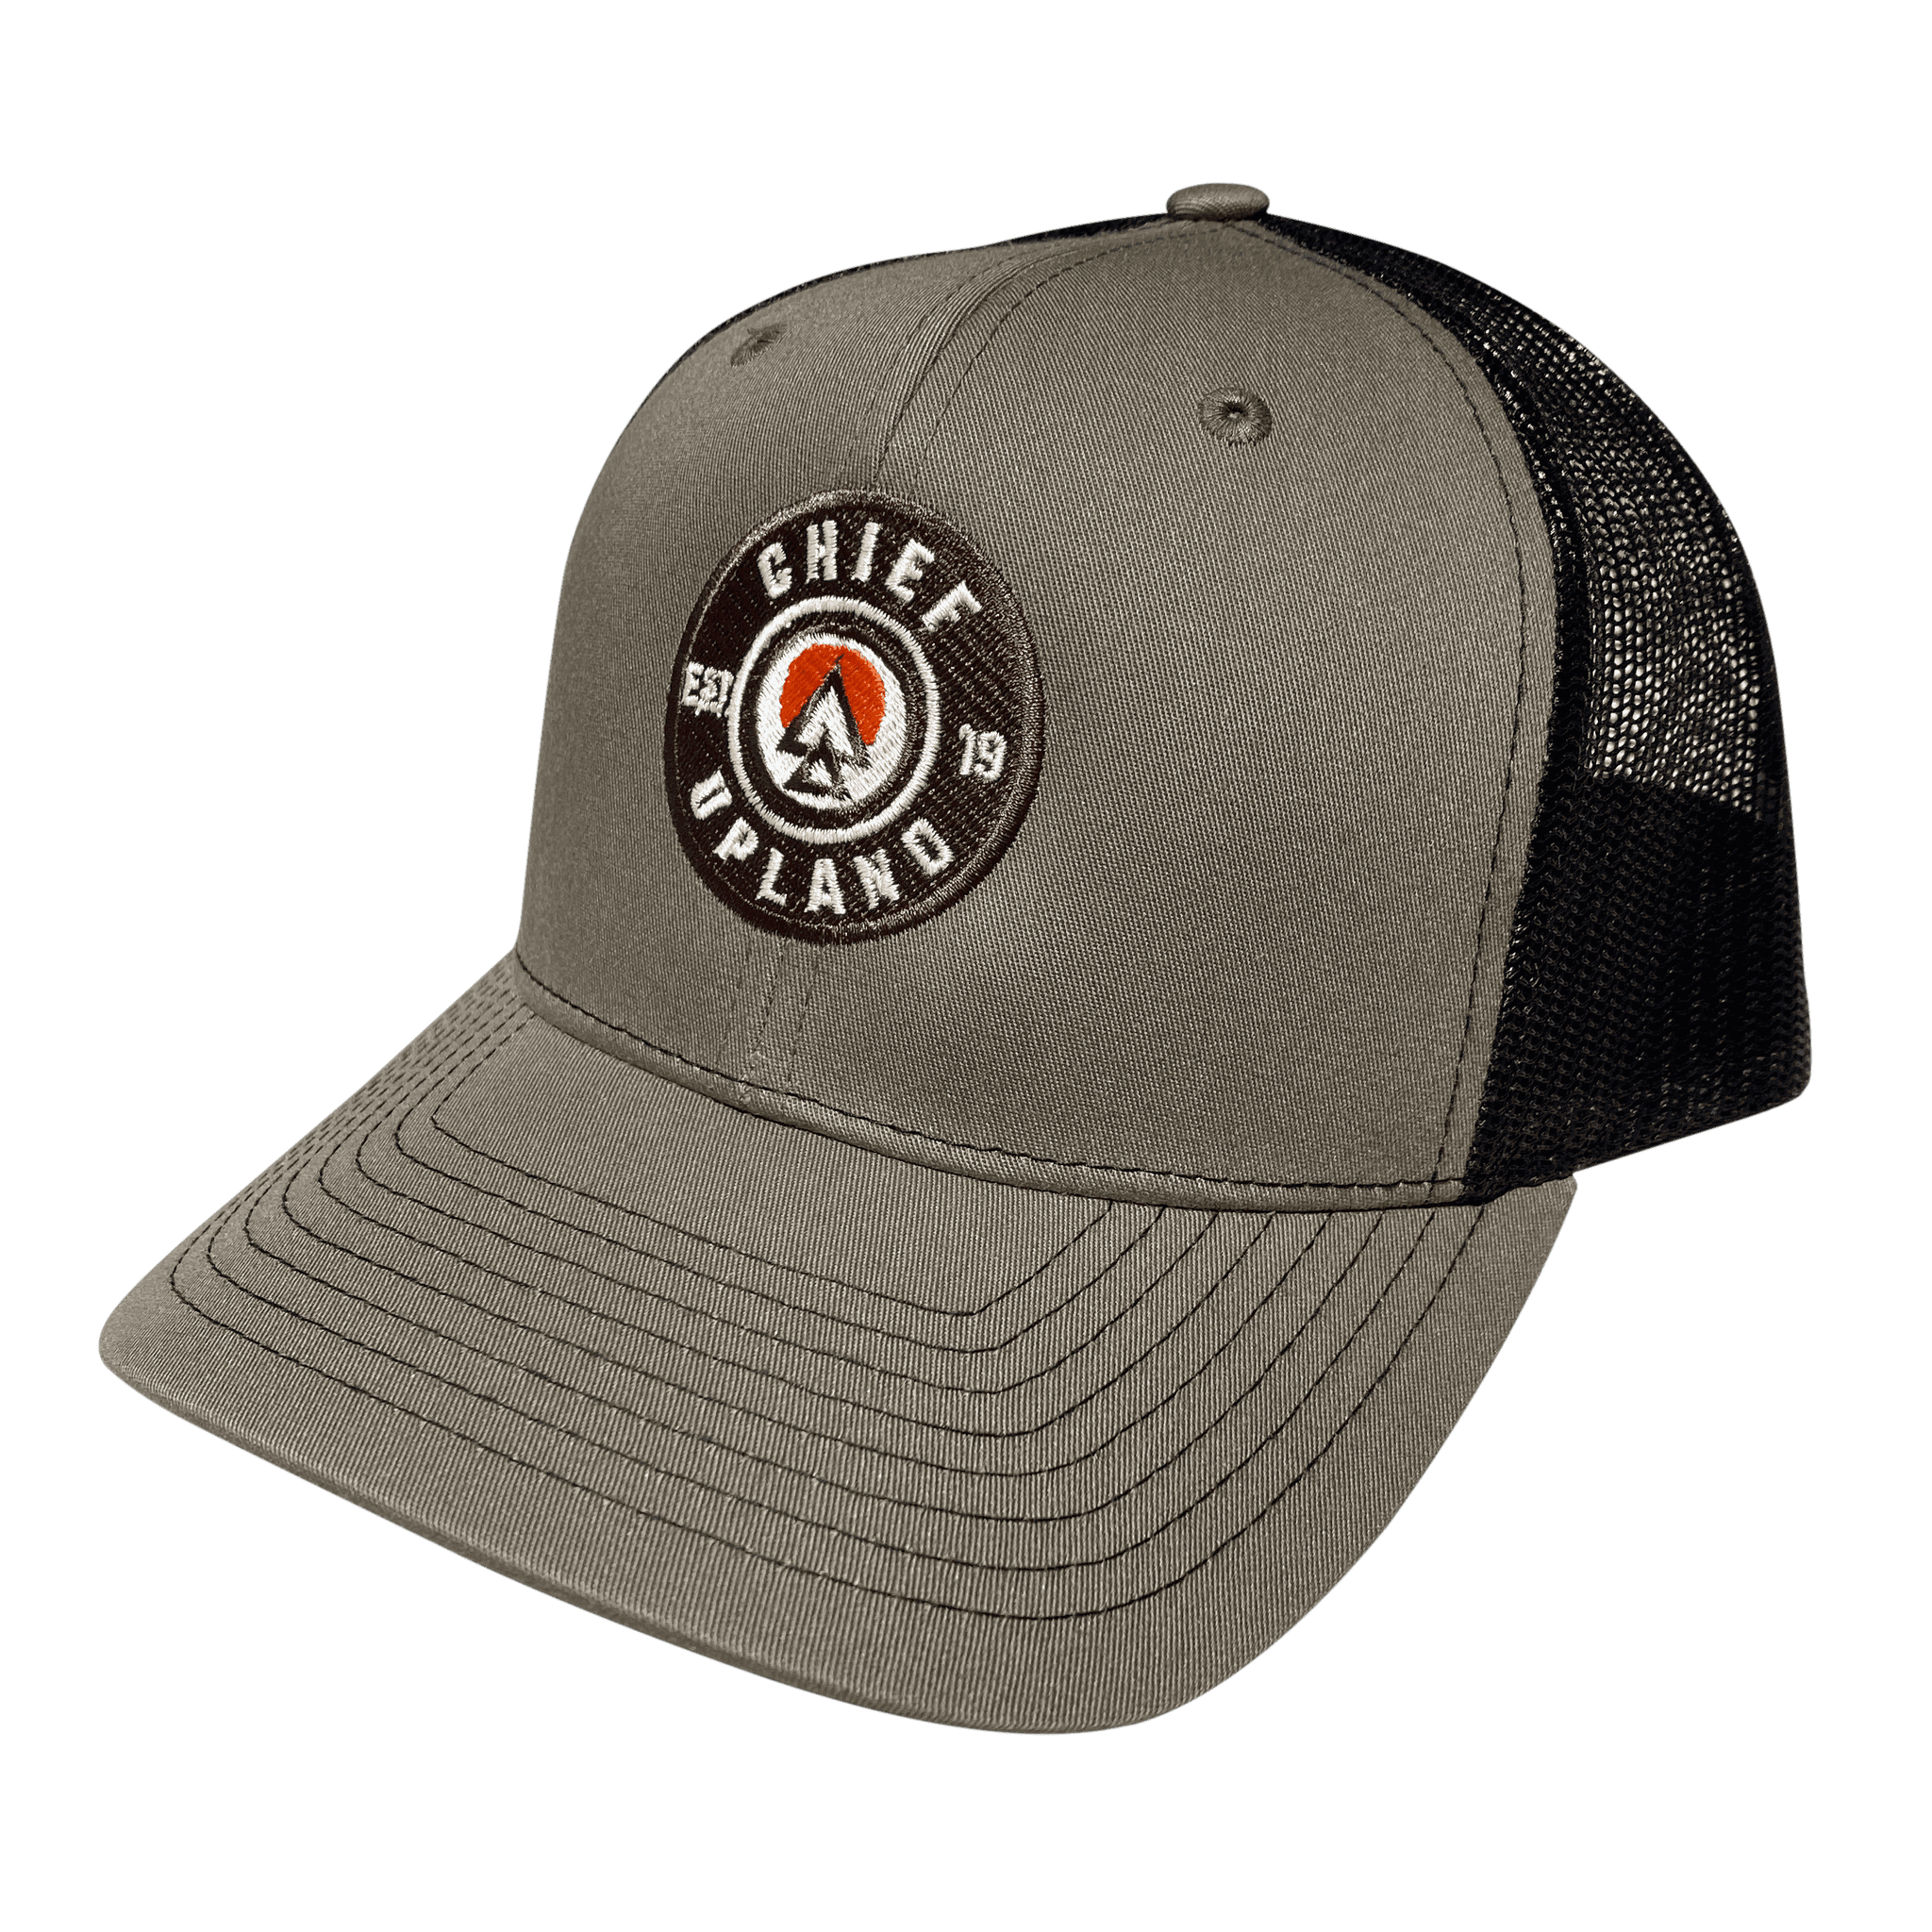 Premium Snapback Hat - Loden/Black Roundel